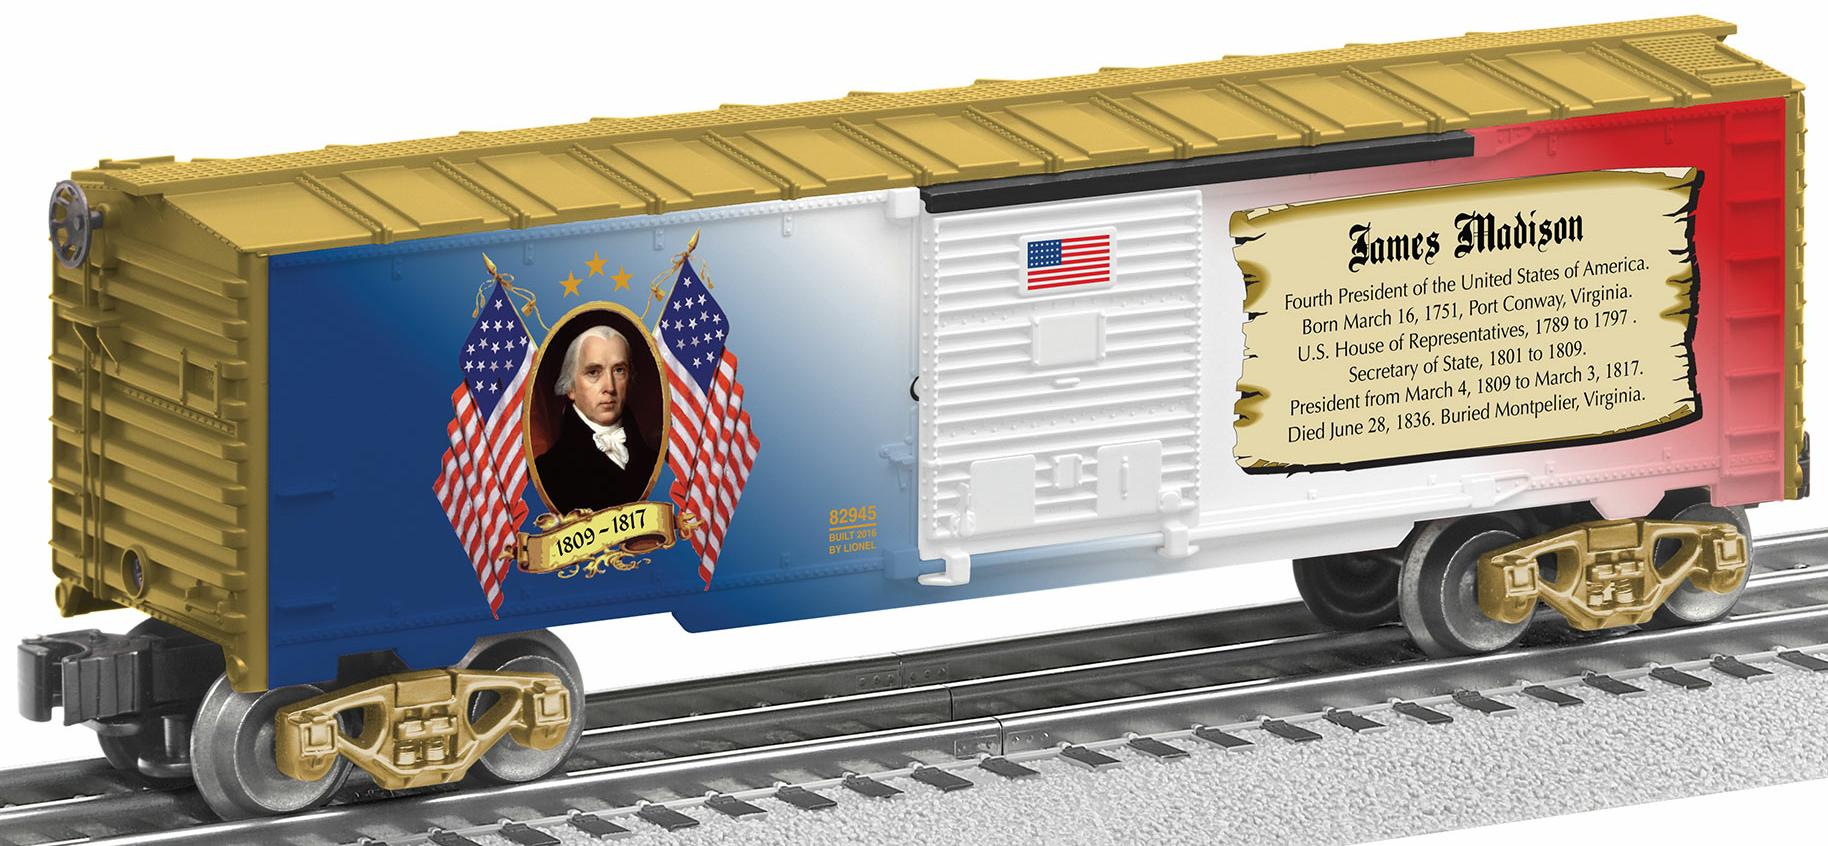 James Madison boxcar image